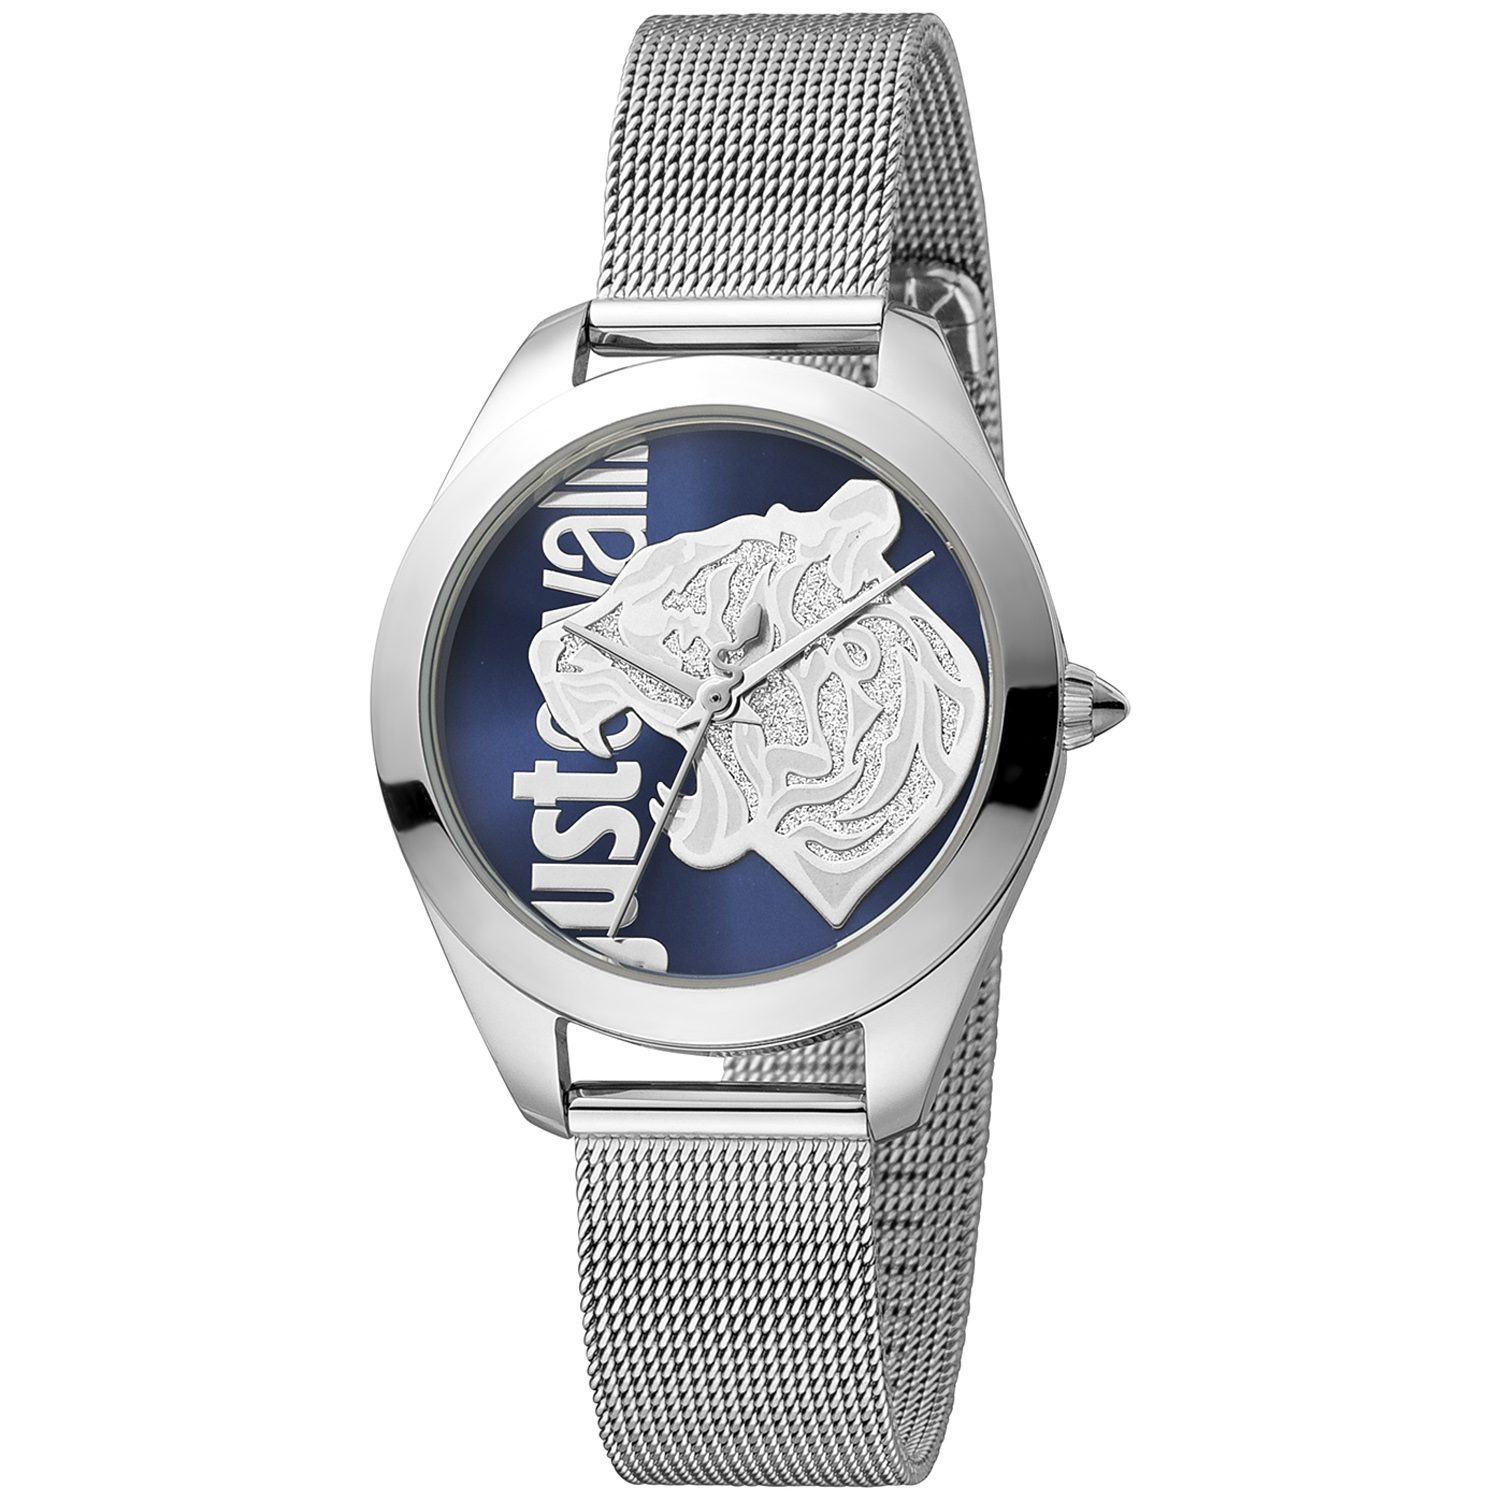 Just Cavalli dames horloge JC1L210M0035 - zilver staal - 5 ATM - stoere polshorloge